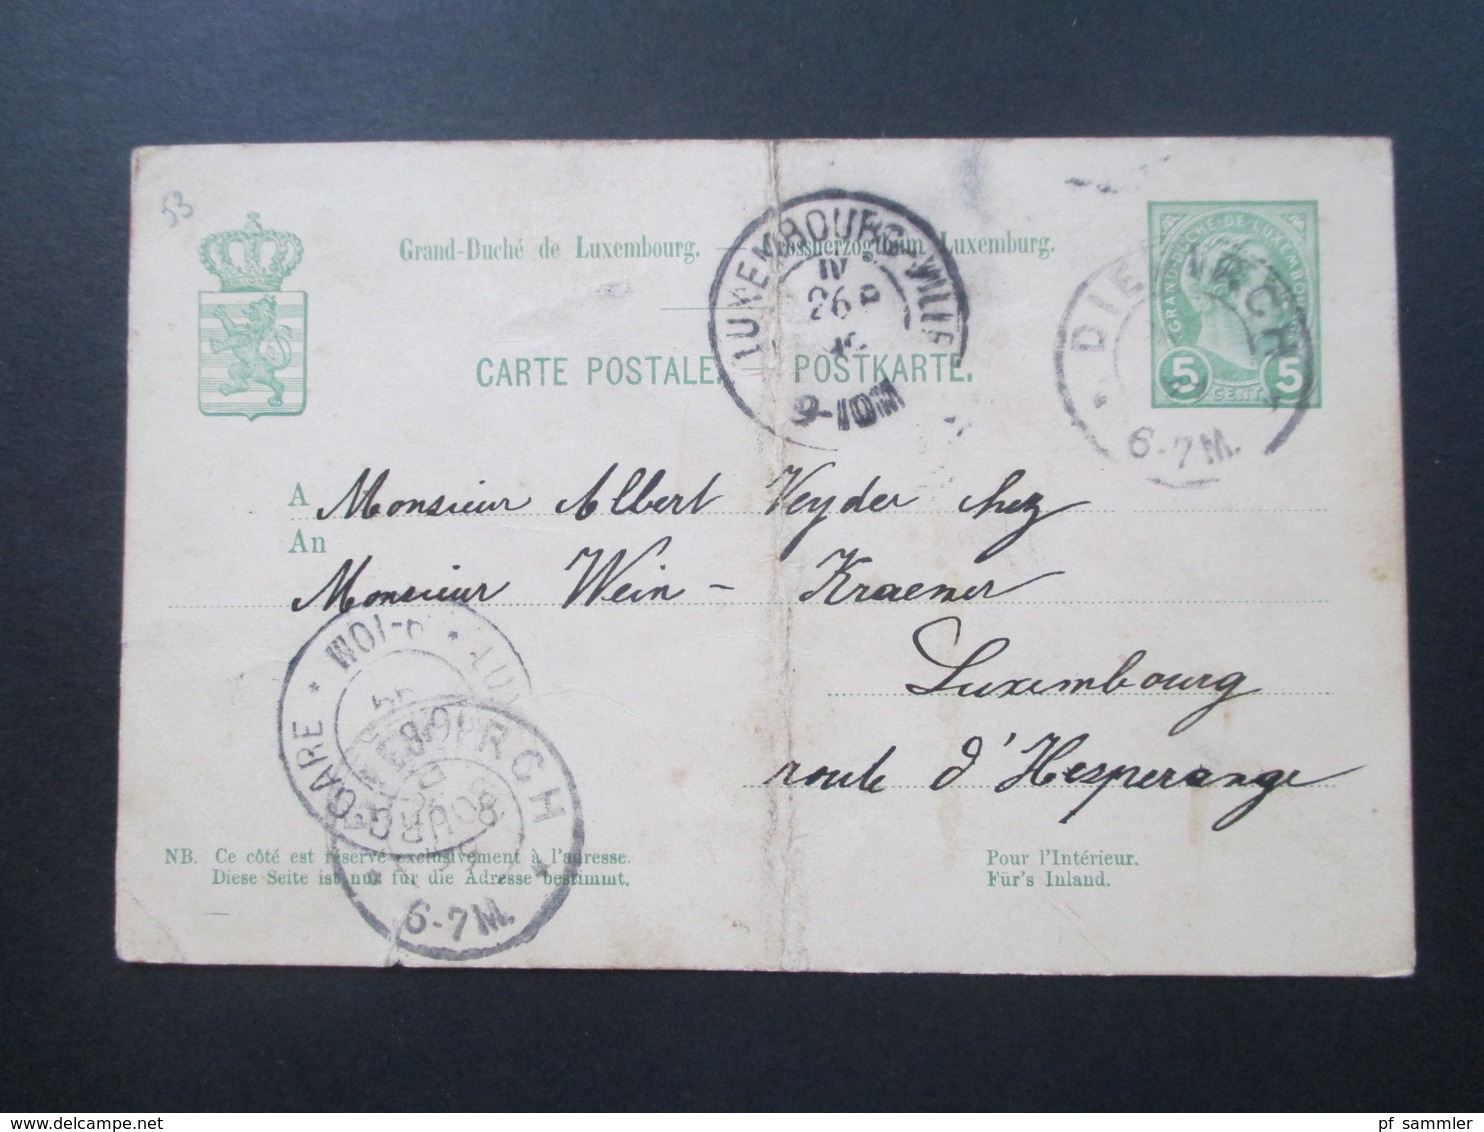 Luxemburg 44 Ganzsachen! 4x incomming Mail. Interessante Stempel. Ambulant / Rahmenstempel usw. ca. 1884 - 1926